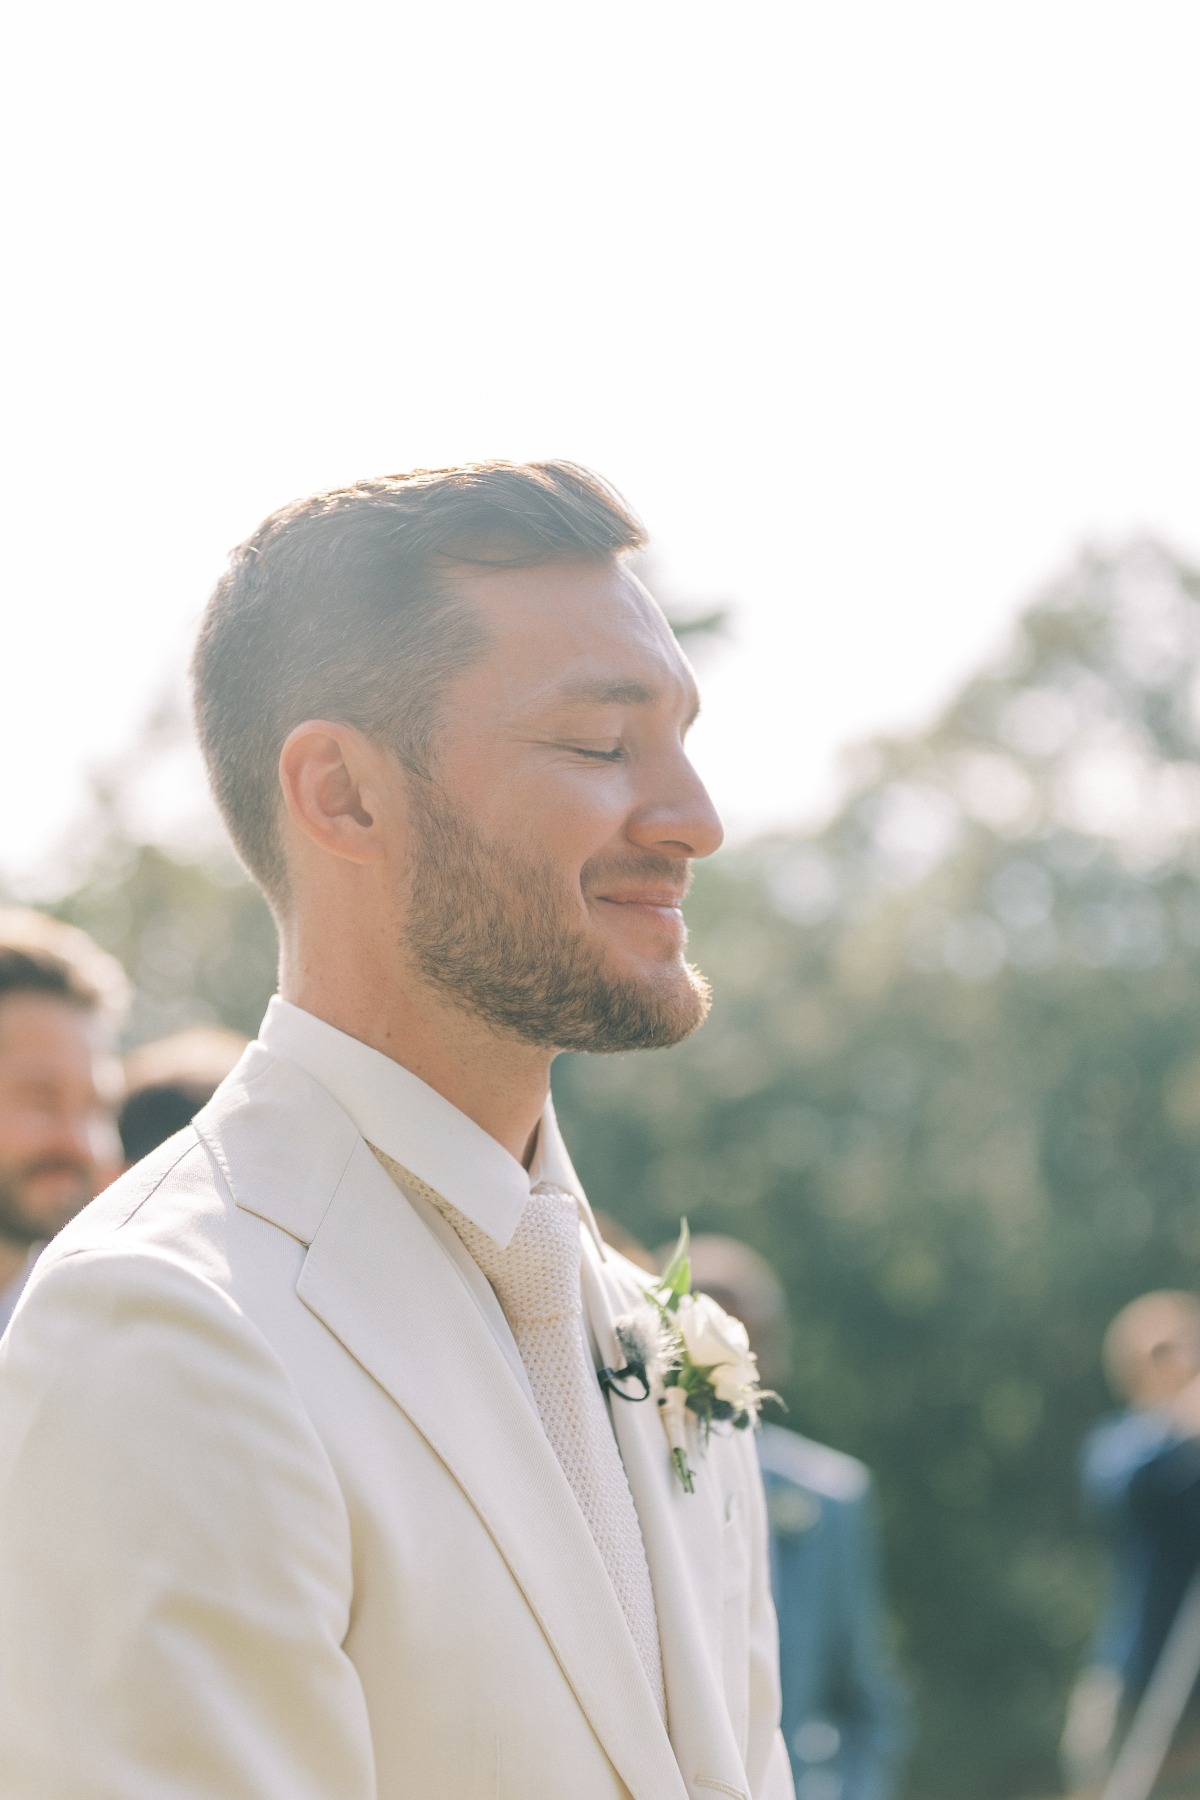 Emotional groom seeing bride walk down the aisle at garden wedding